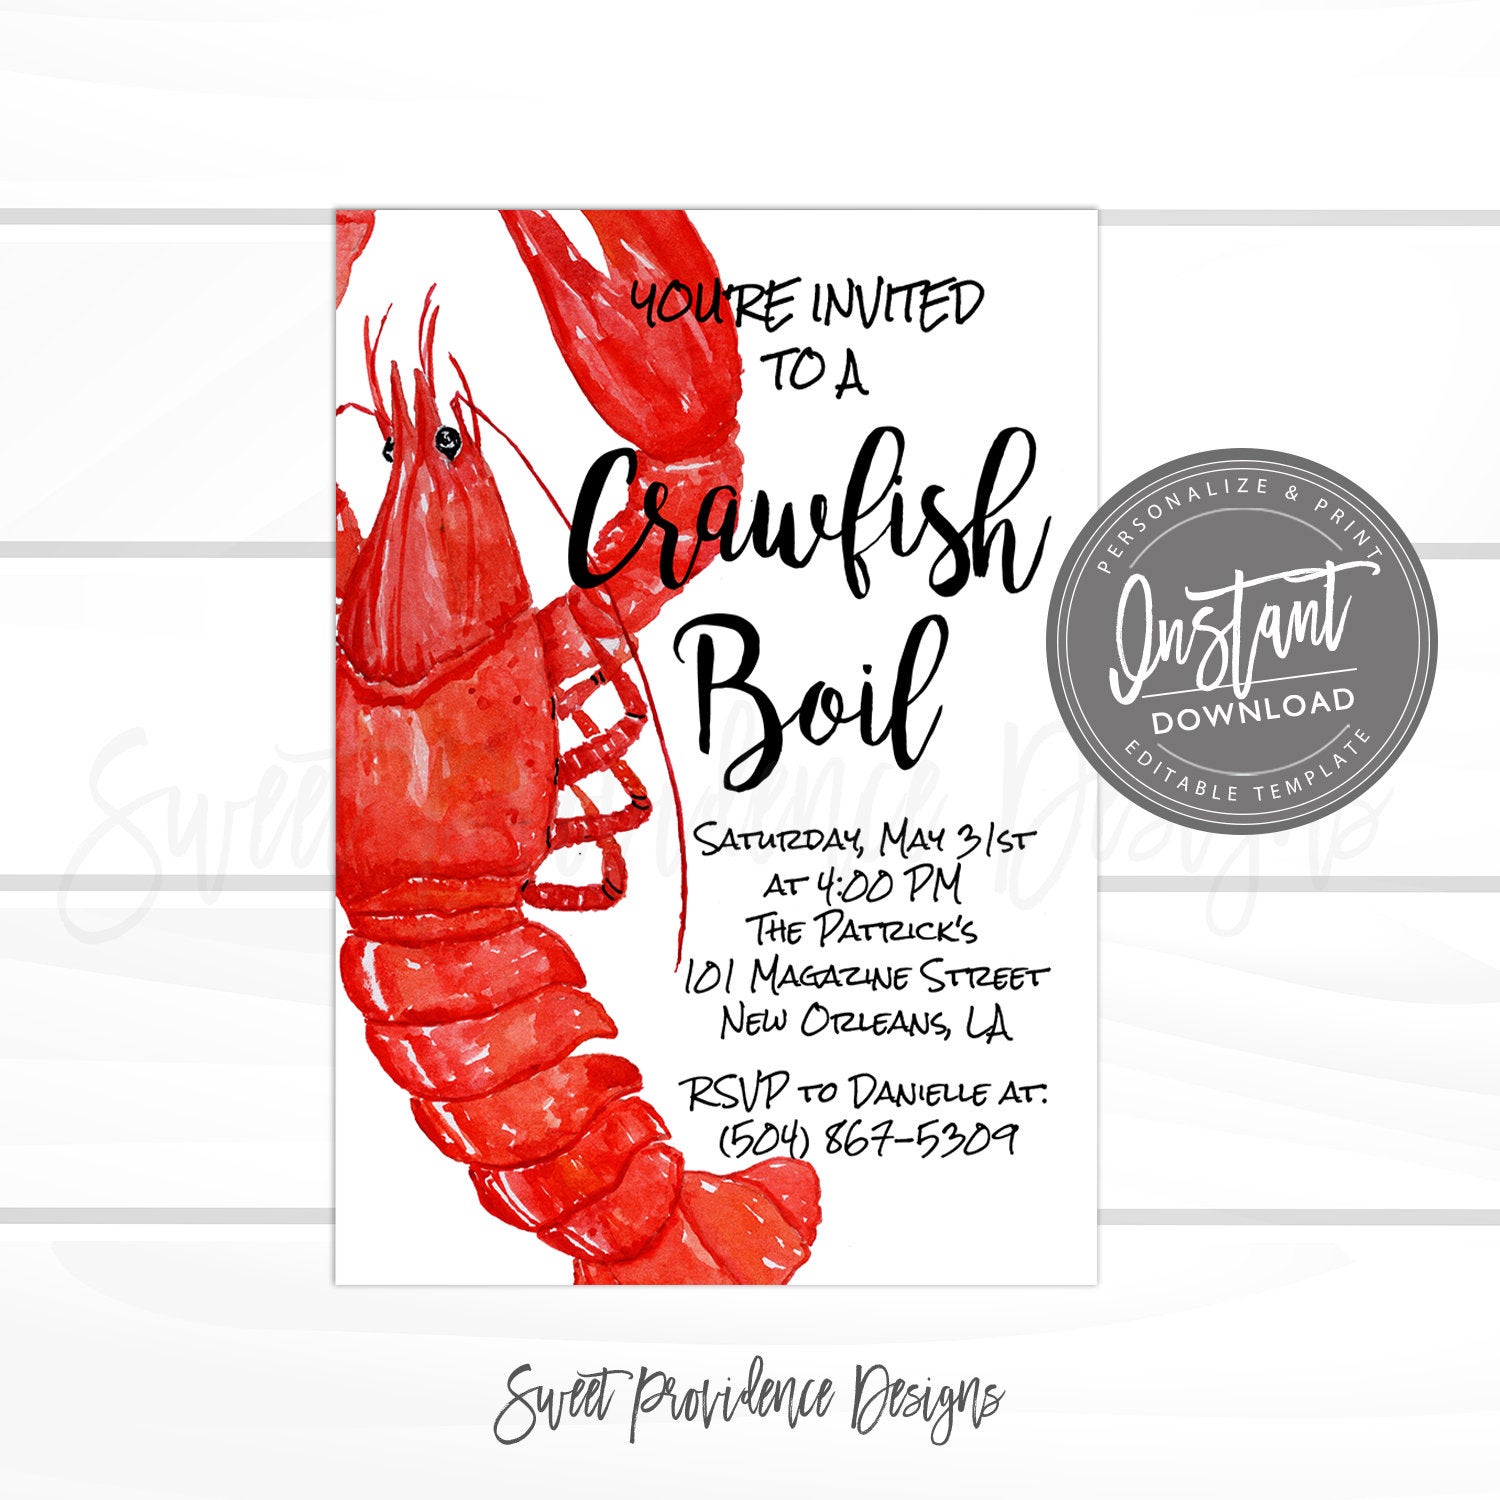 Crawfish Boil Invitations Free Printable